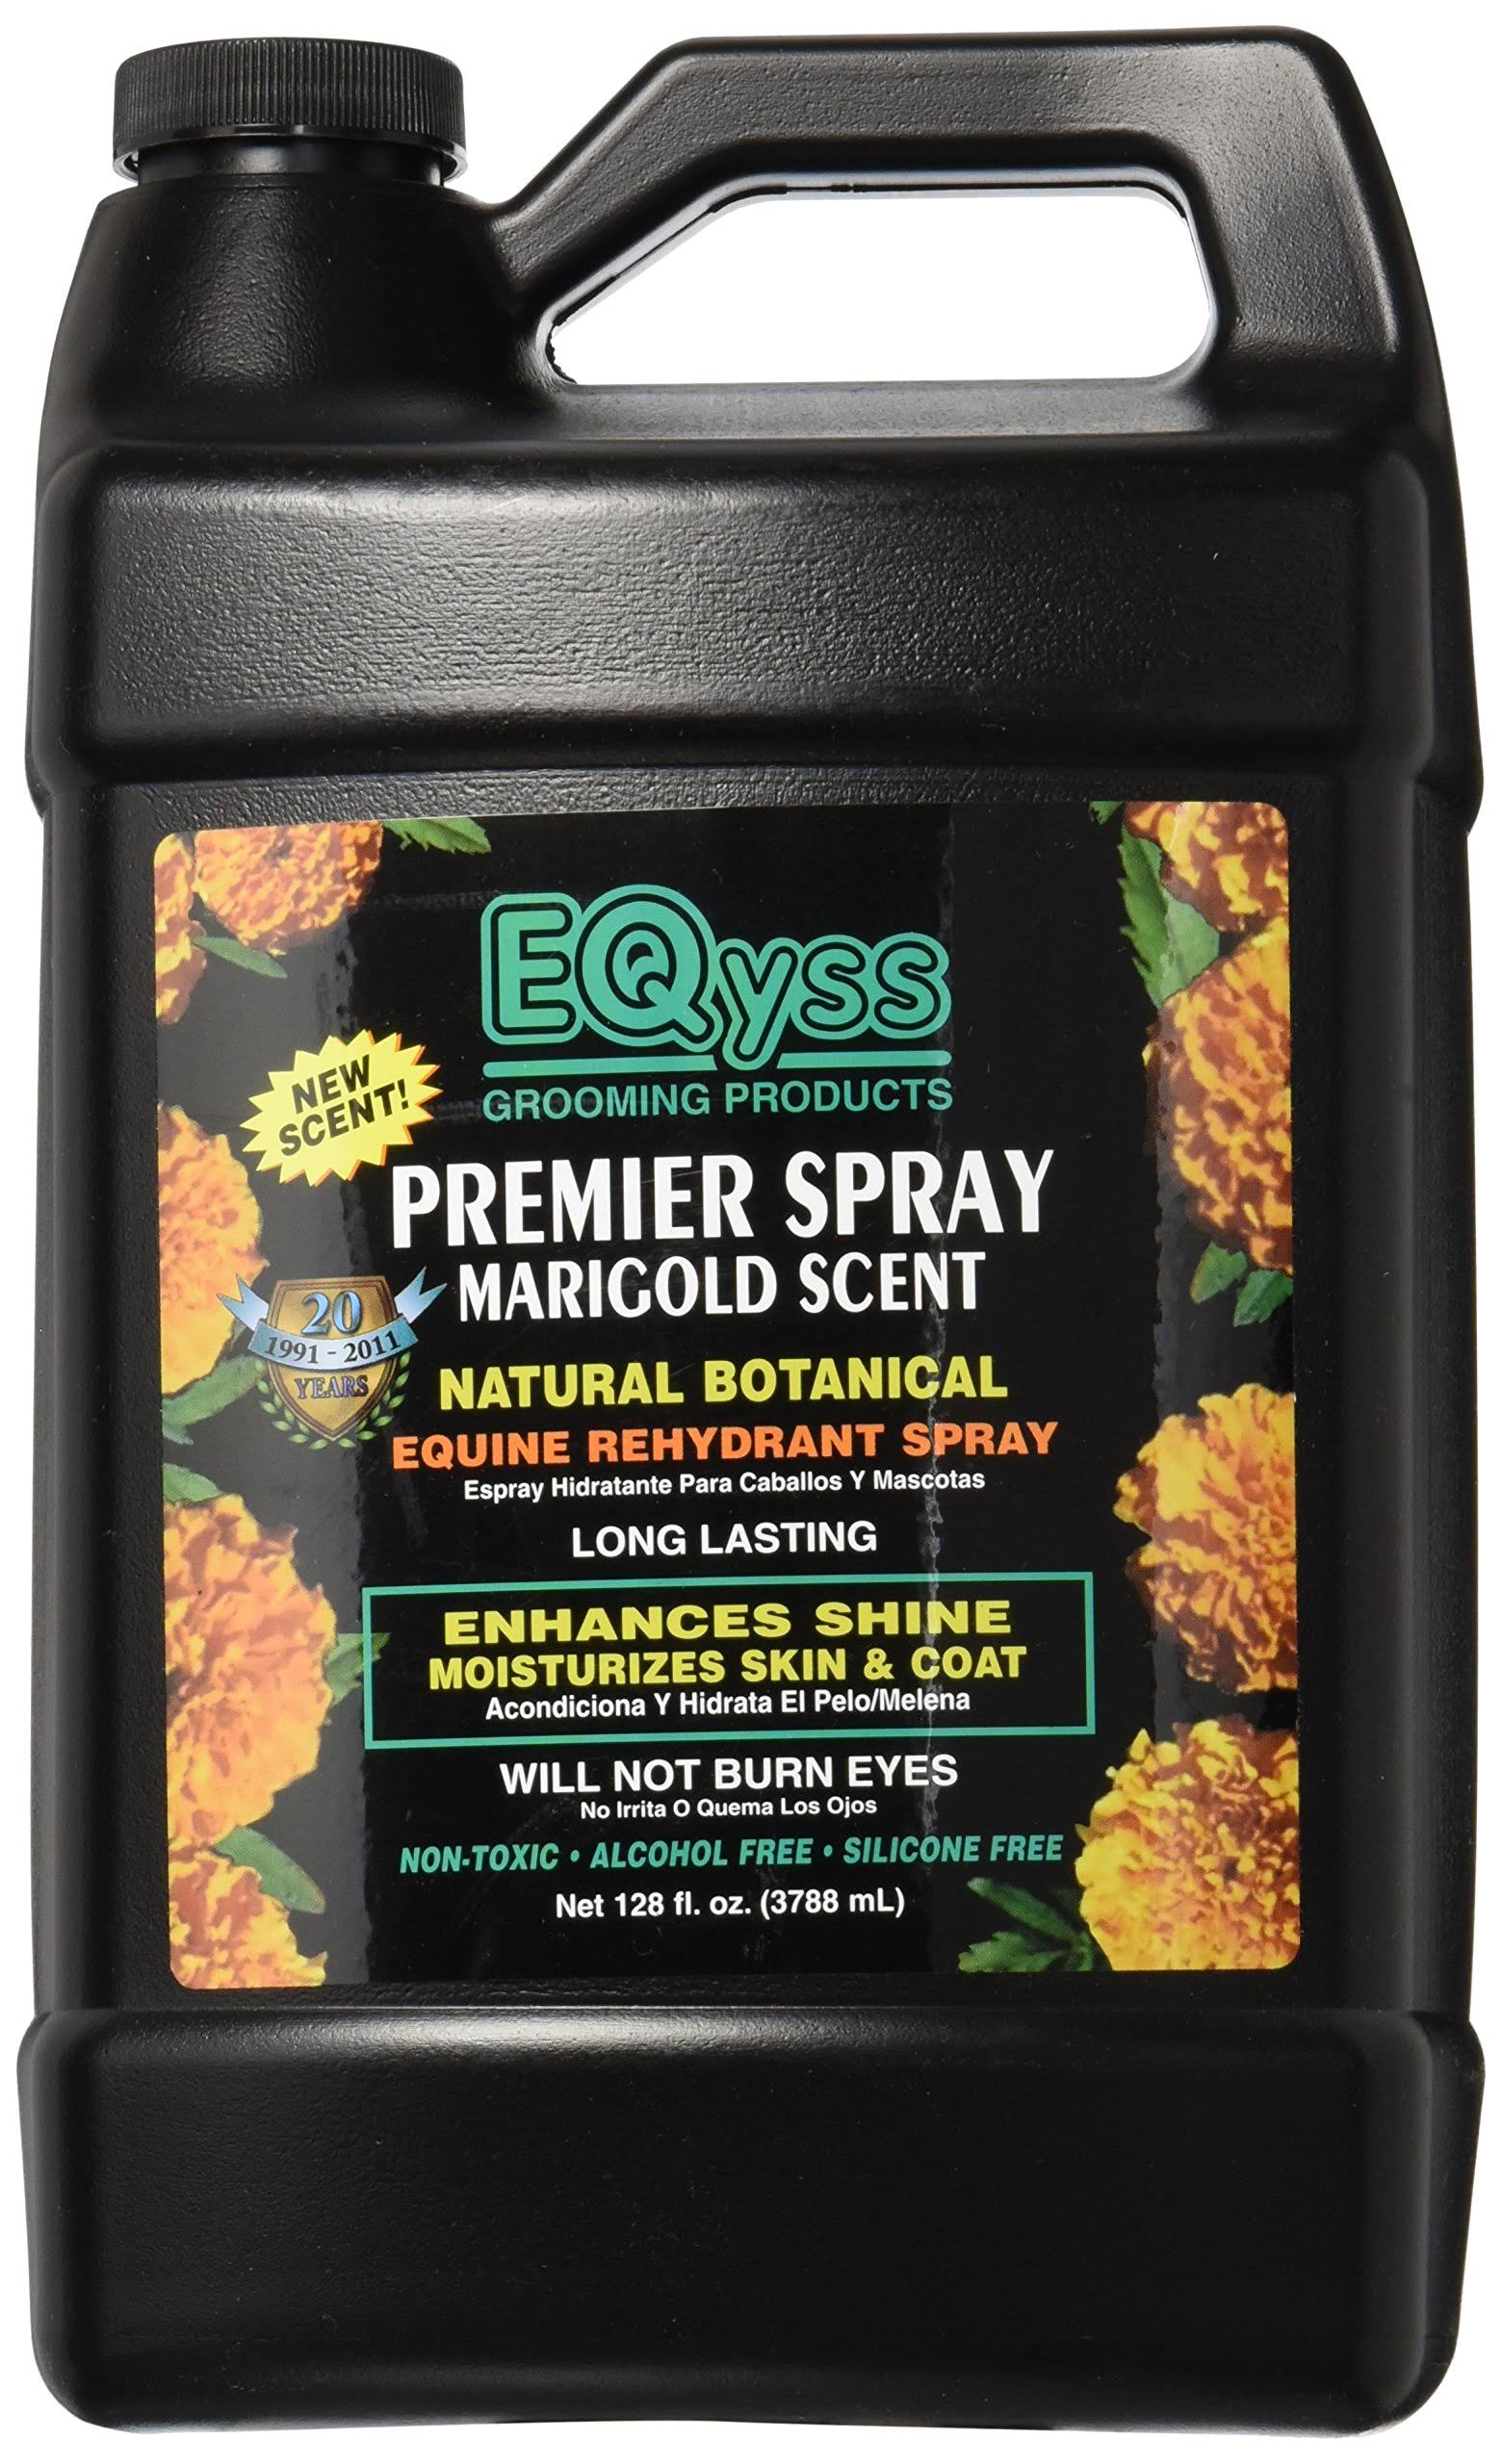 EQyss Premier Natural Botanical Equine Rehydrant Spray - Marigold Scent, 128oz